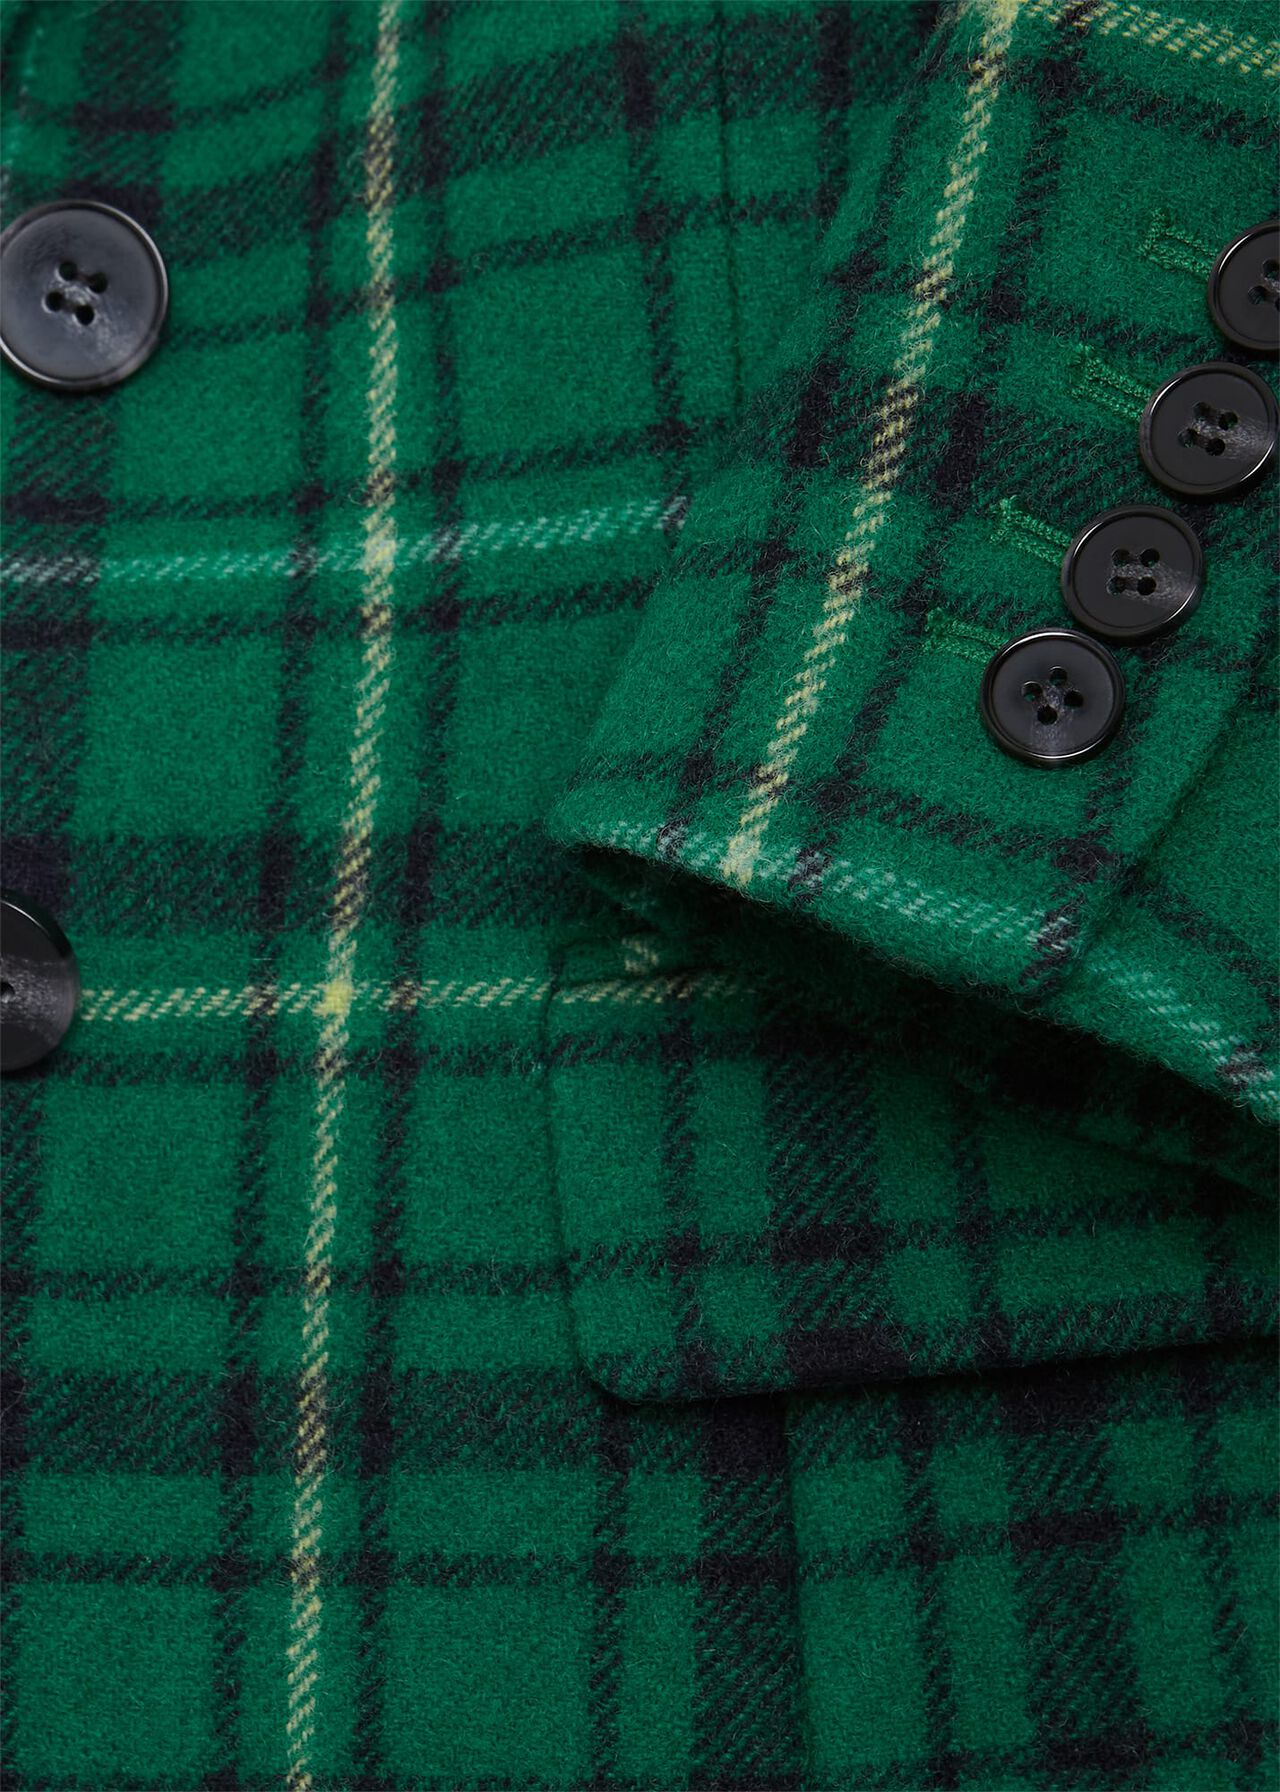 Hackness Wool Jacket, Green Multi, hi-res